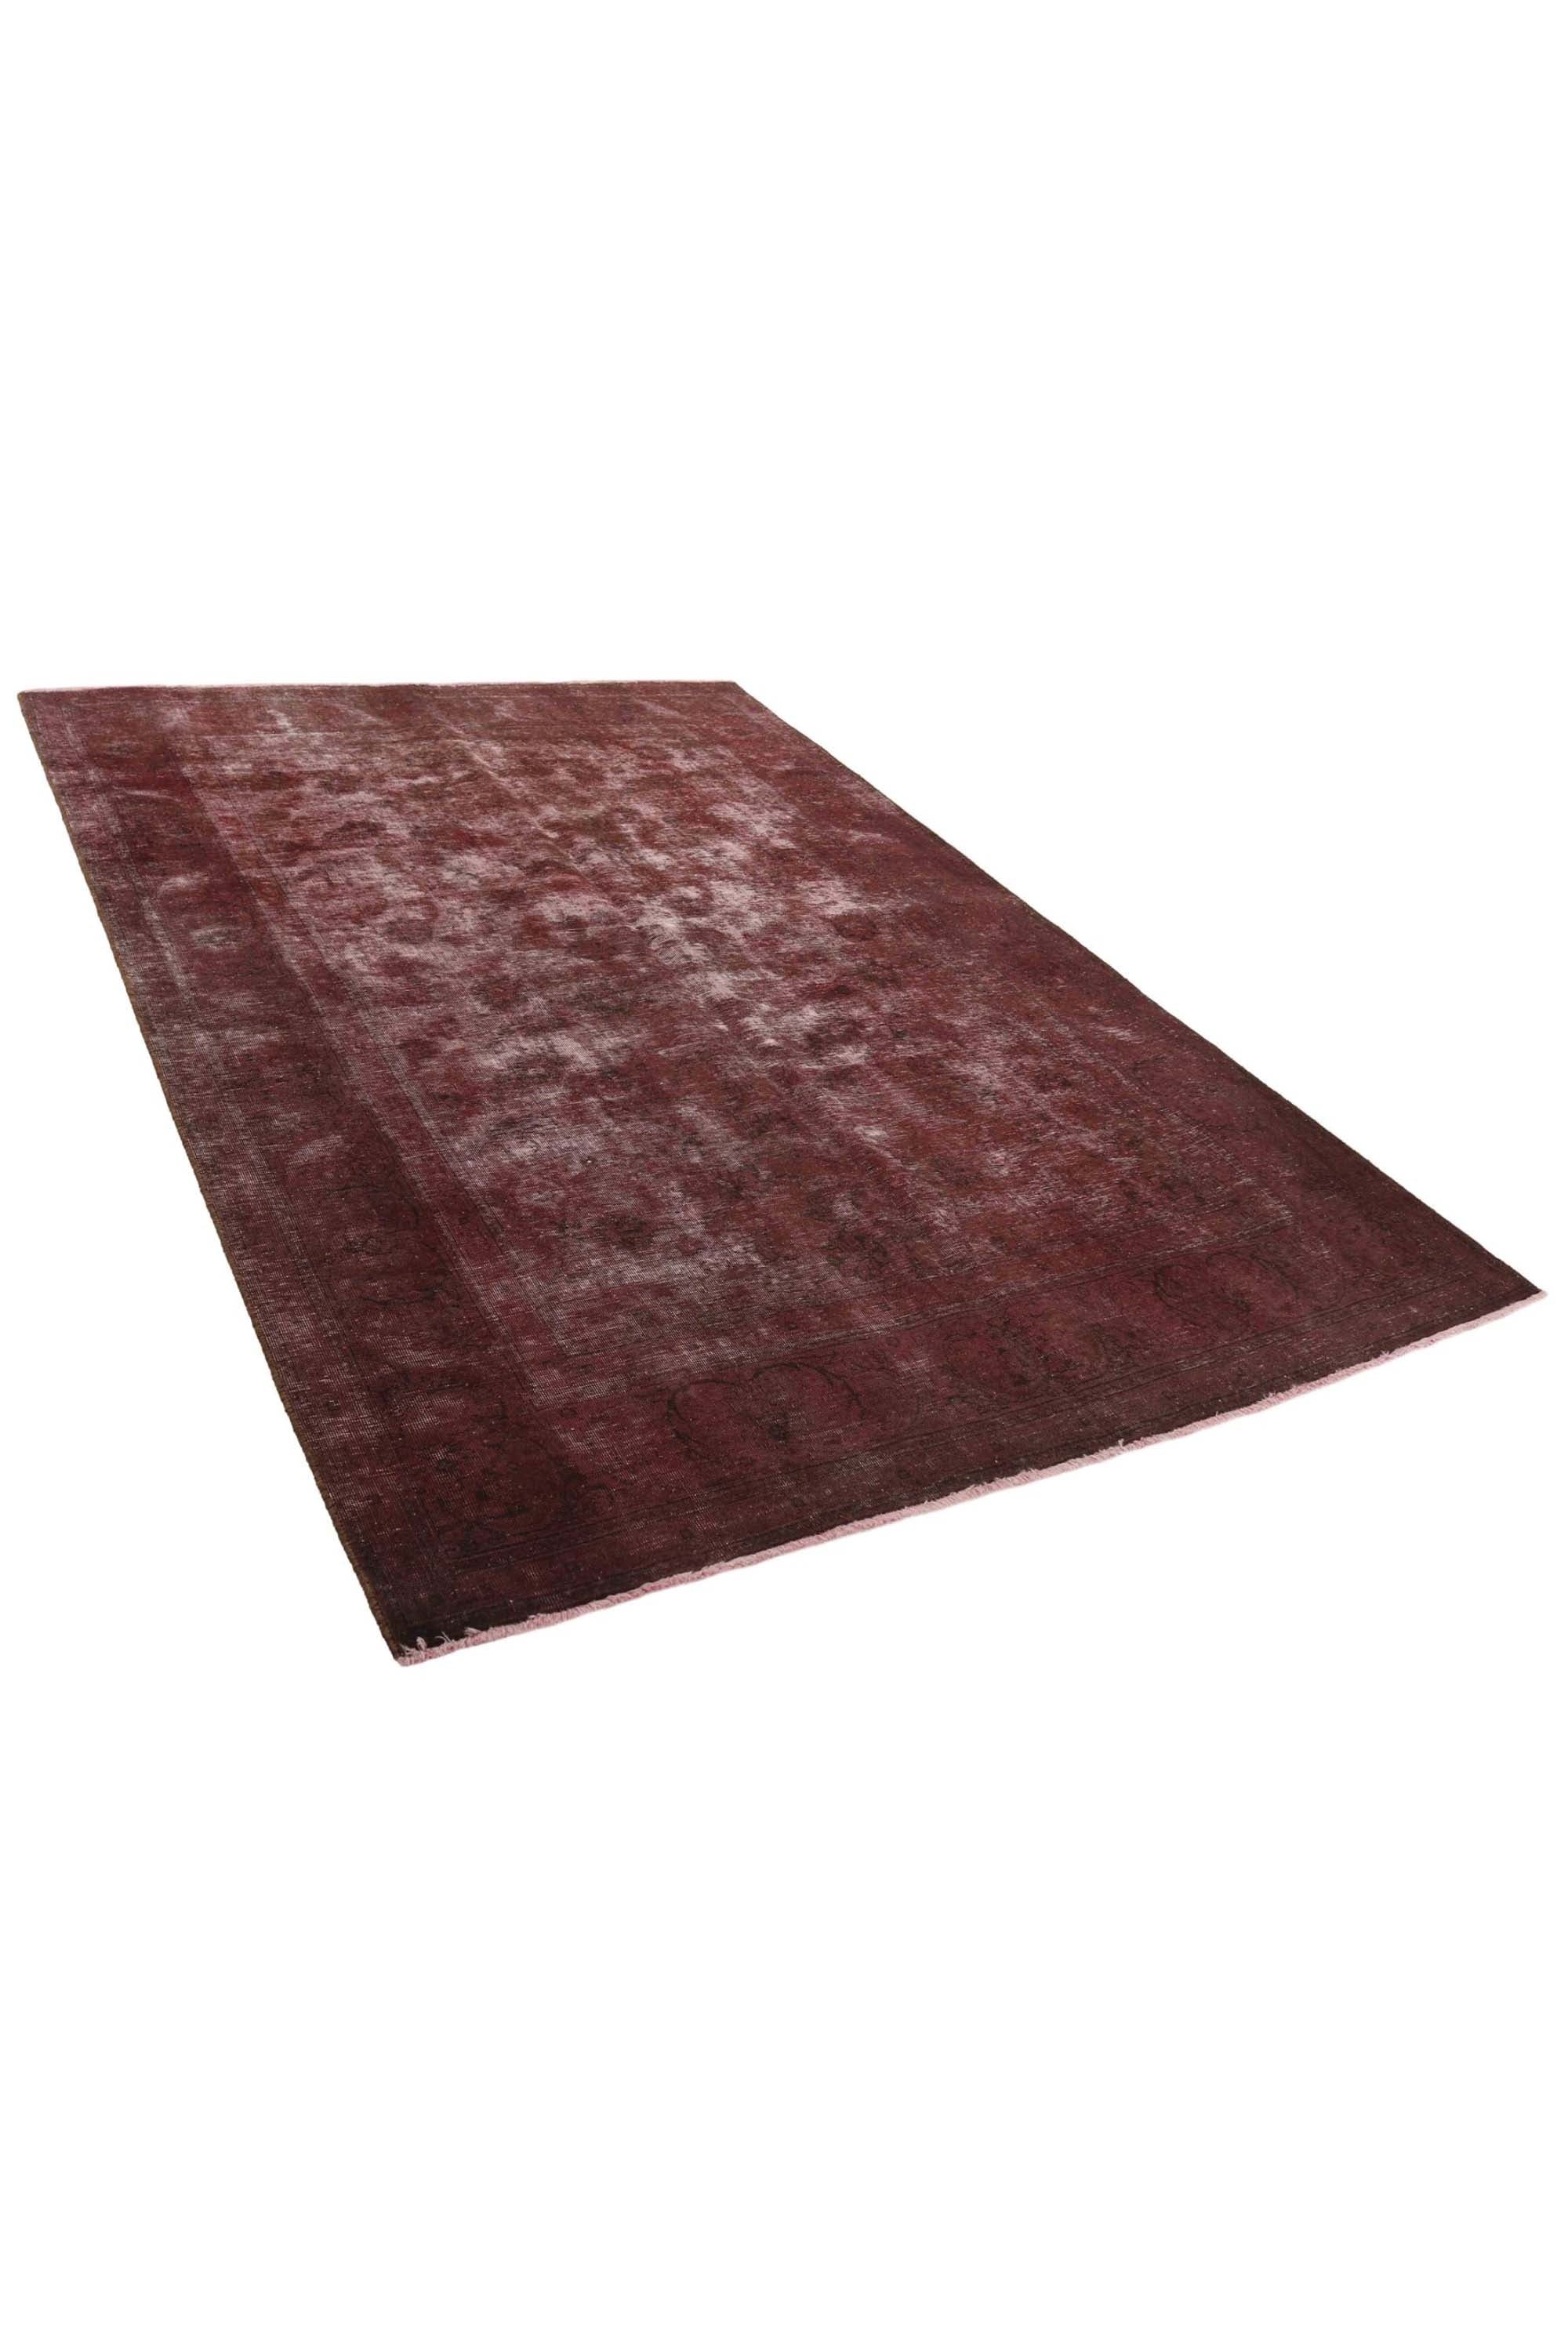 Wine coloured vintage Persian rug